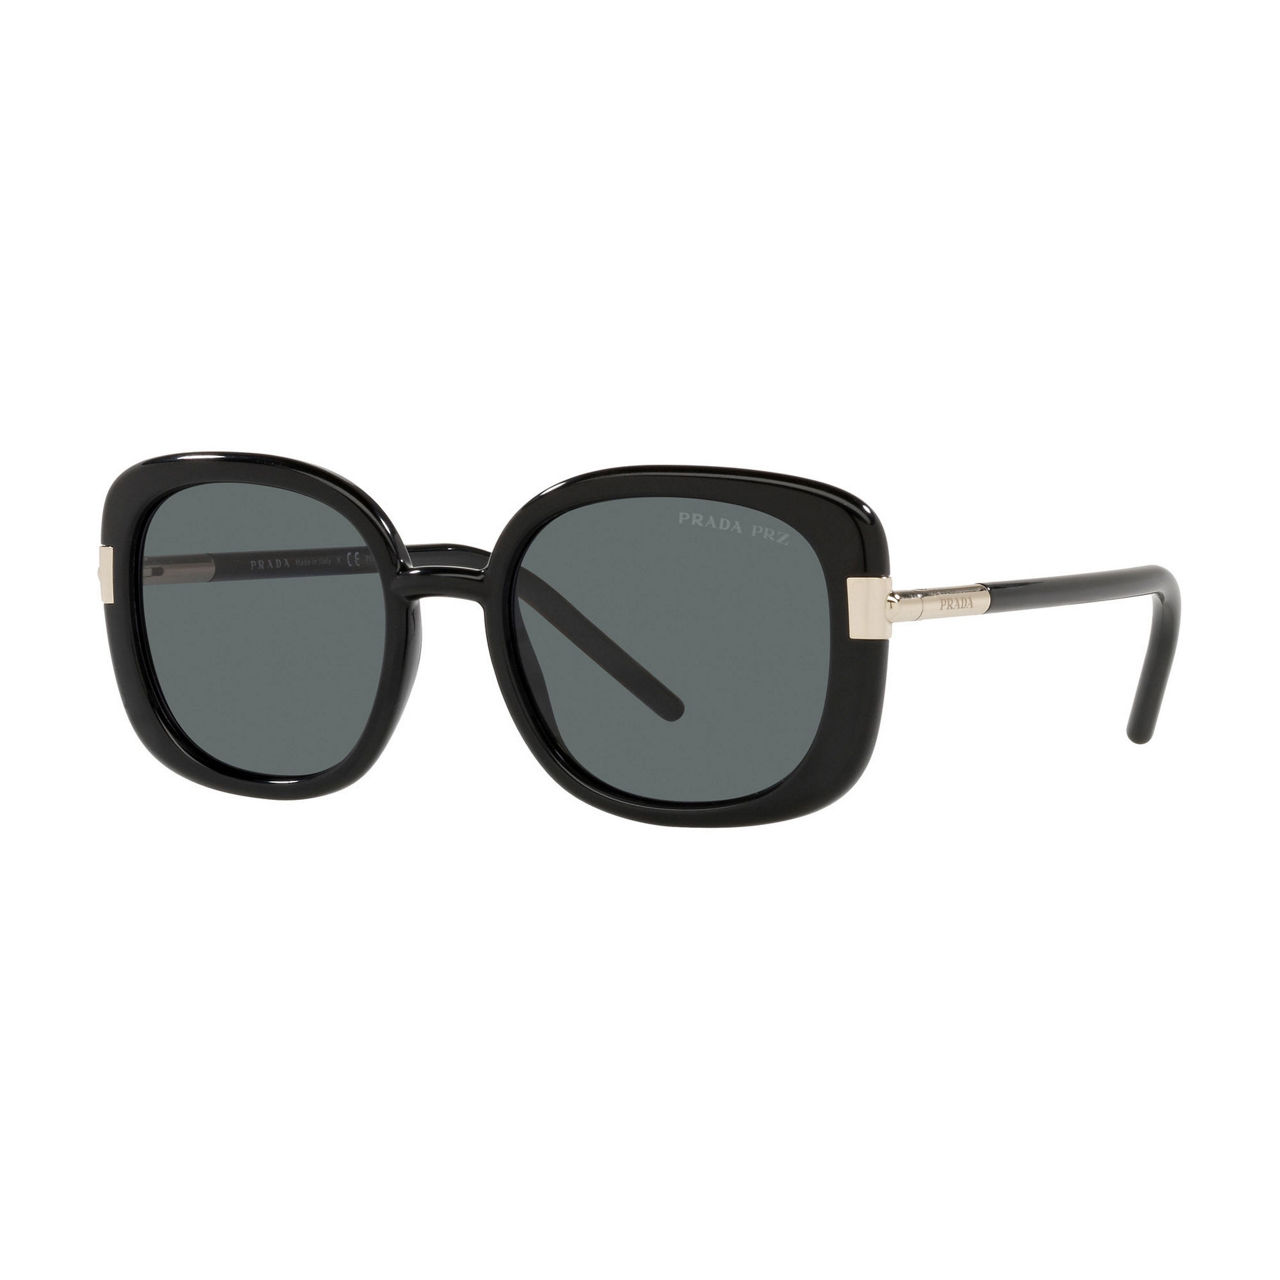 Metallic Oversized Thick Bold Square Luxury Sunglasses